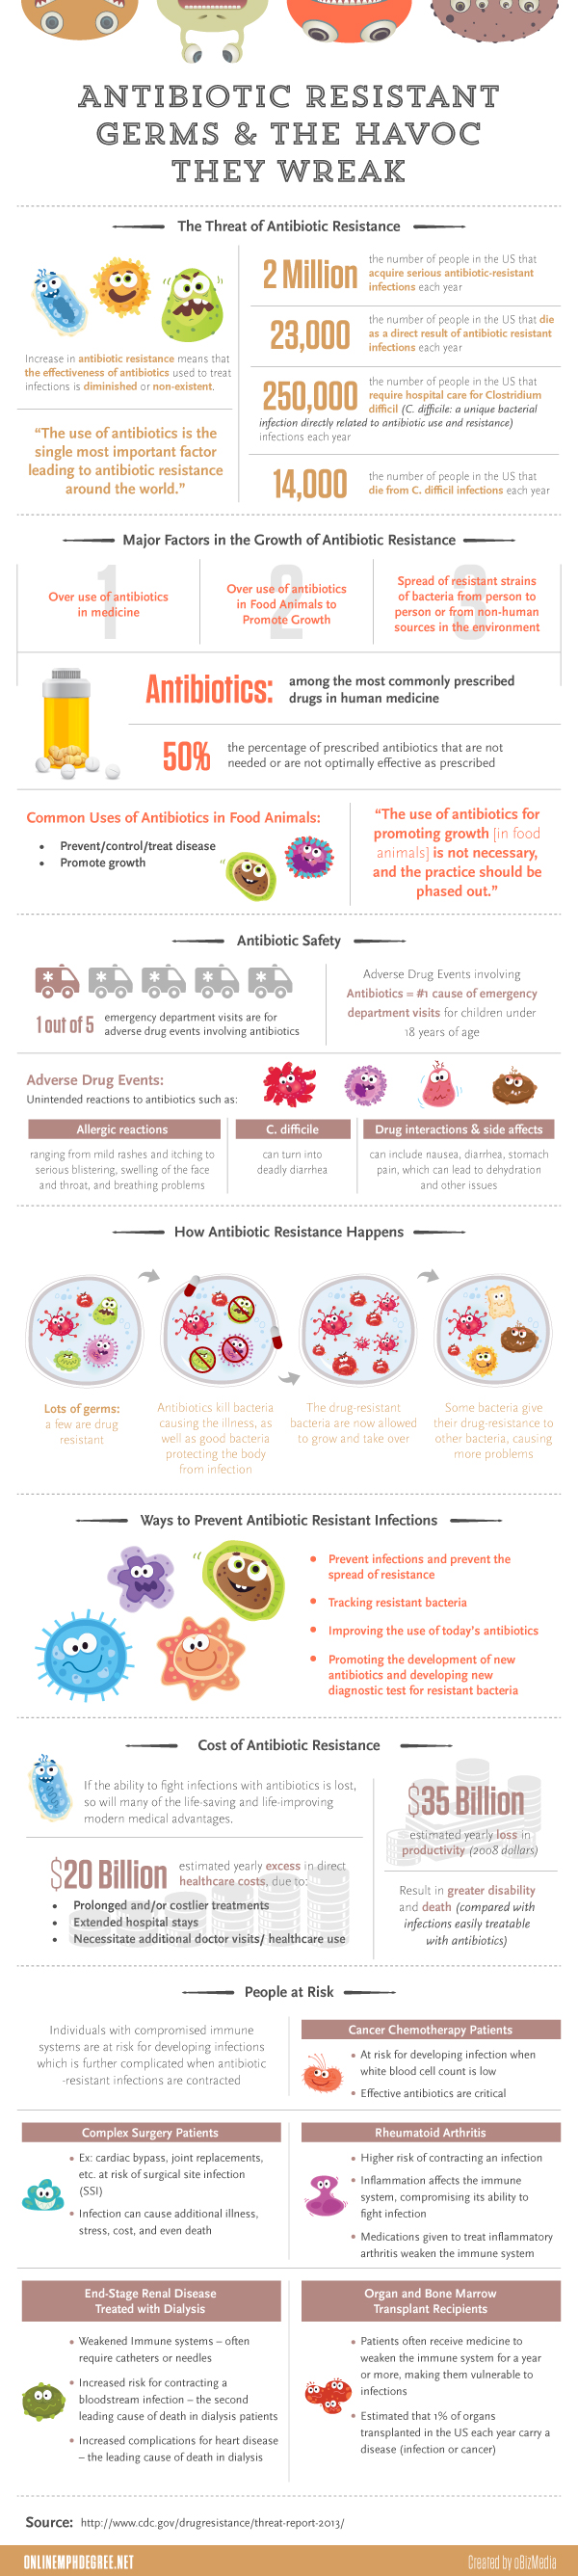 Antibiotic Resistant Infections